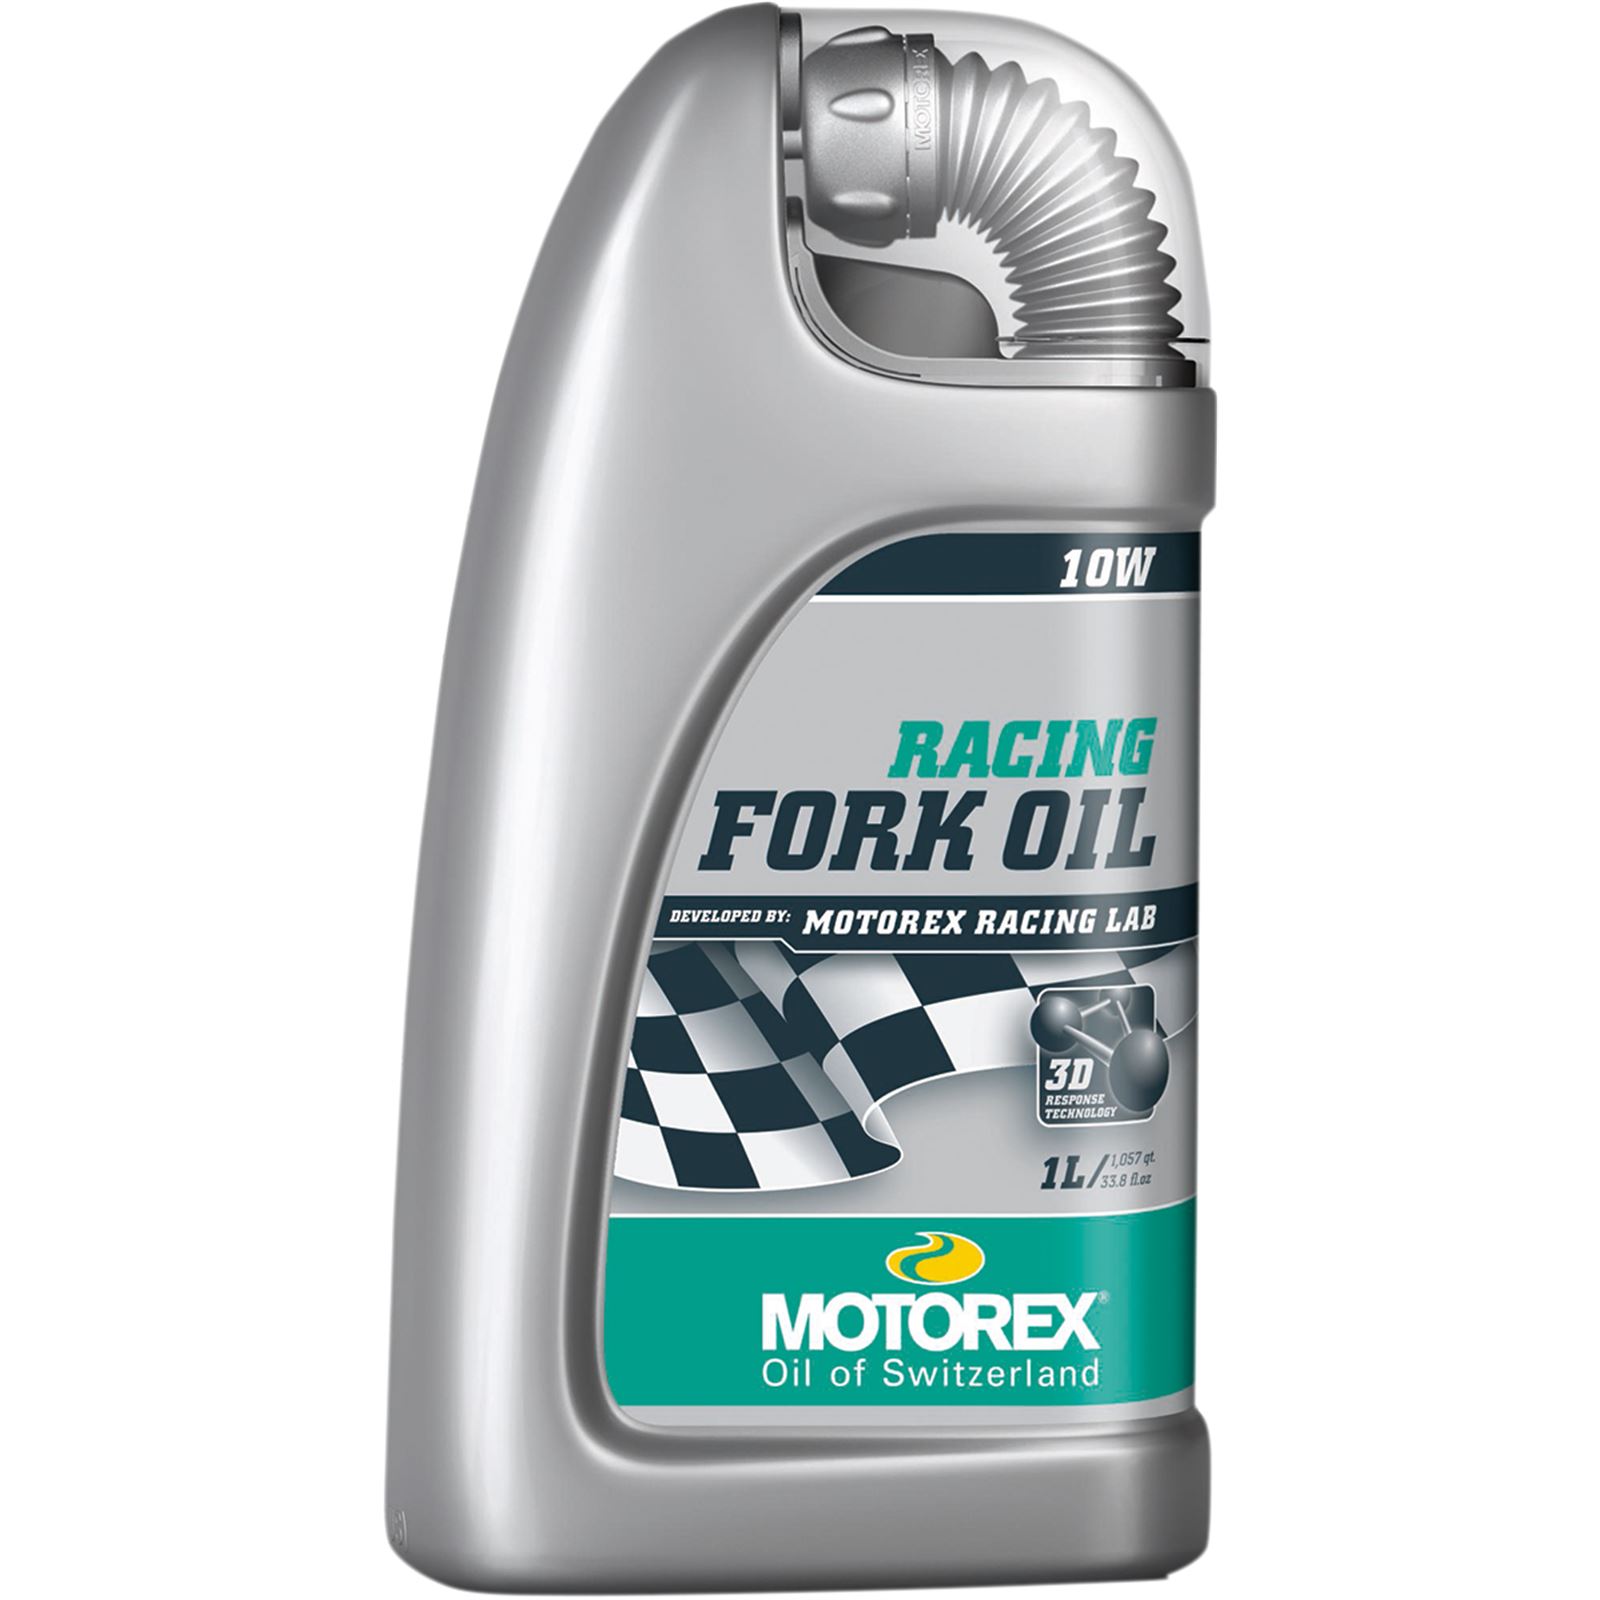 Motorex Low Friction Racing Fork Oil - 10W - 1 Liter